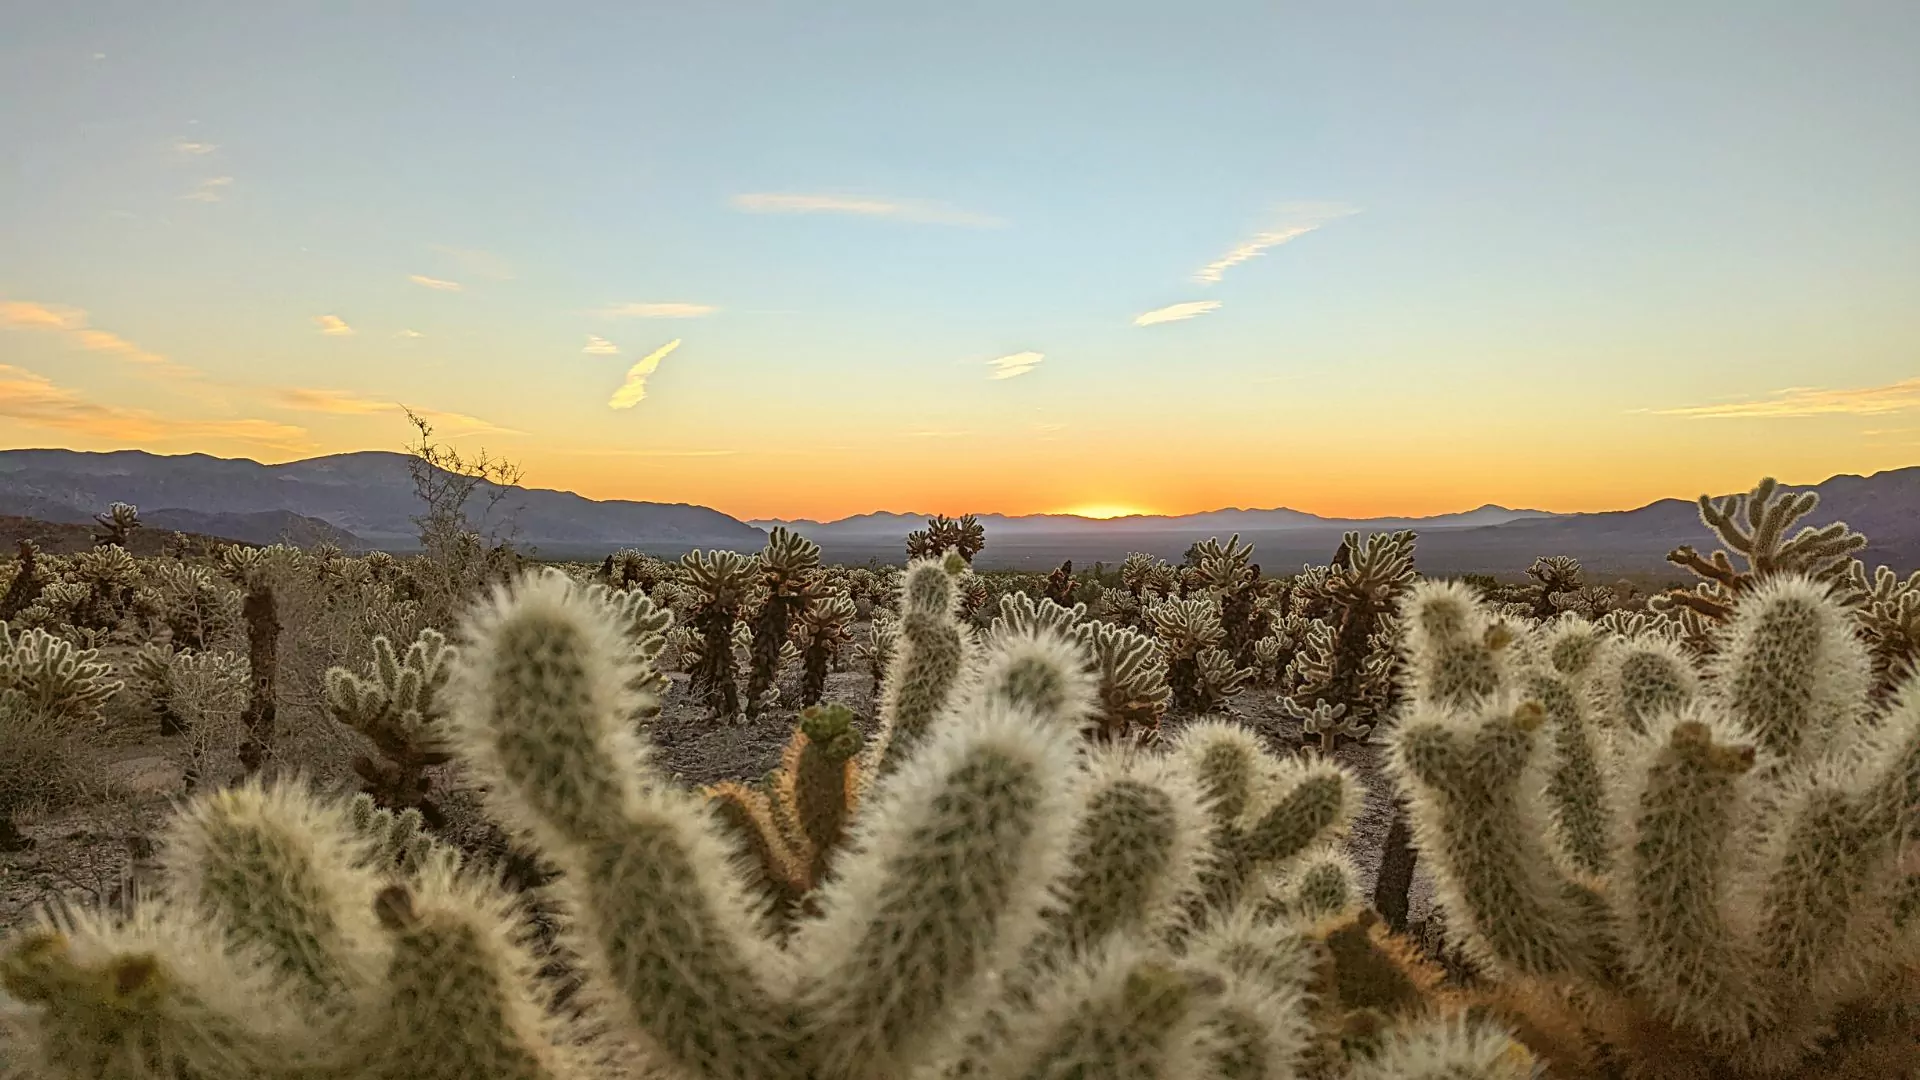 Sunrise at cholla cactus garden, Joshua Tree National Park